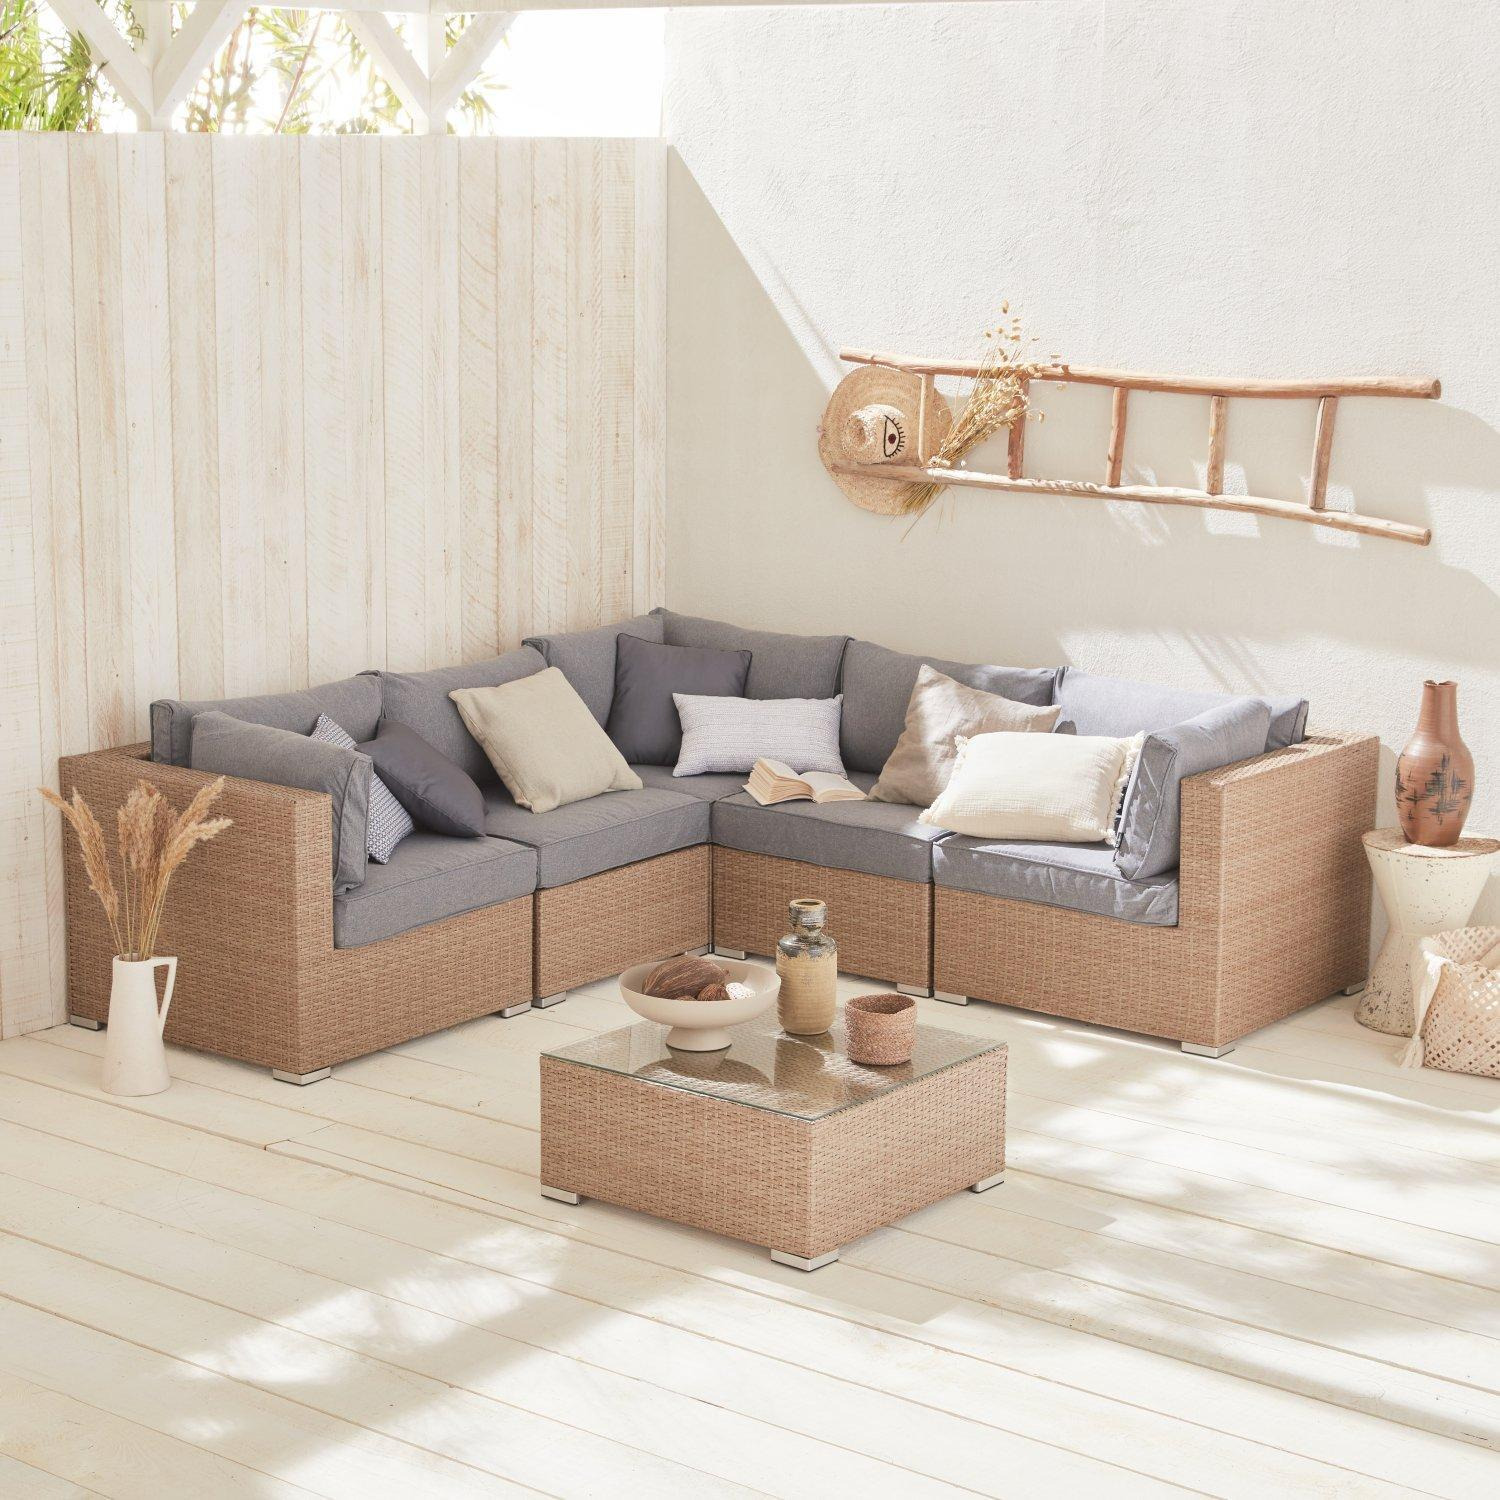 5-seater Premium Polyrattan Corner Garden Sofa Set - image 1